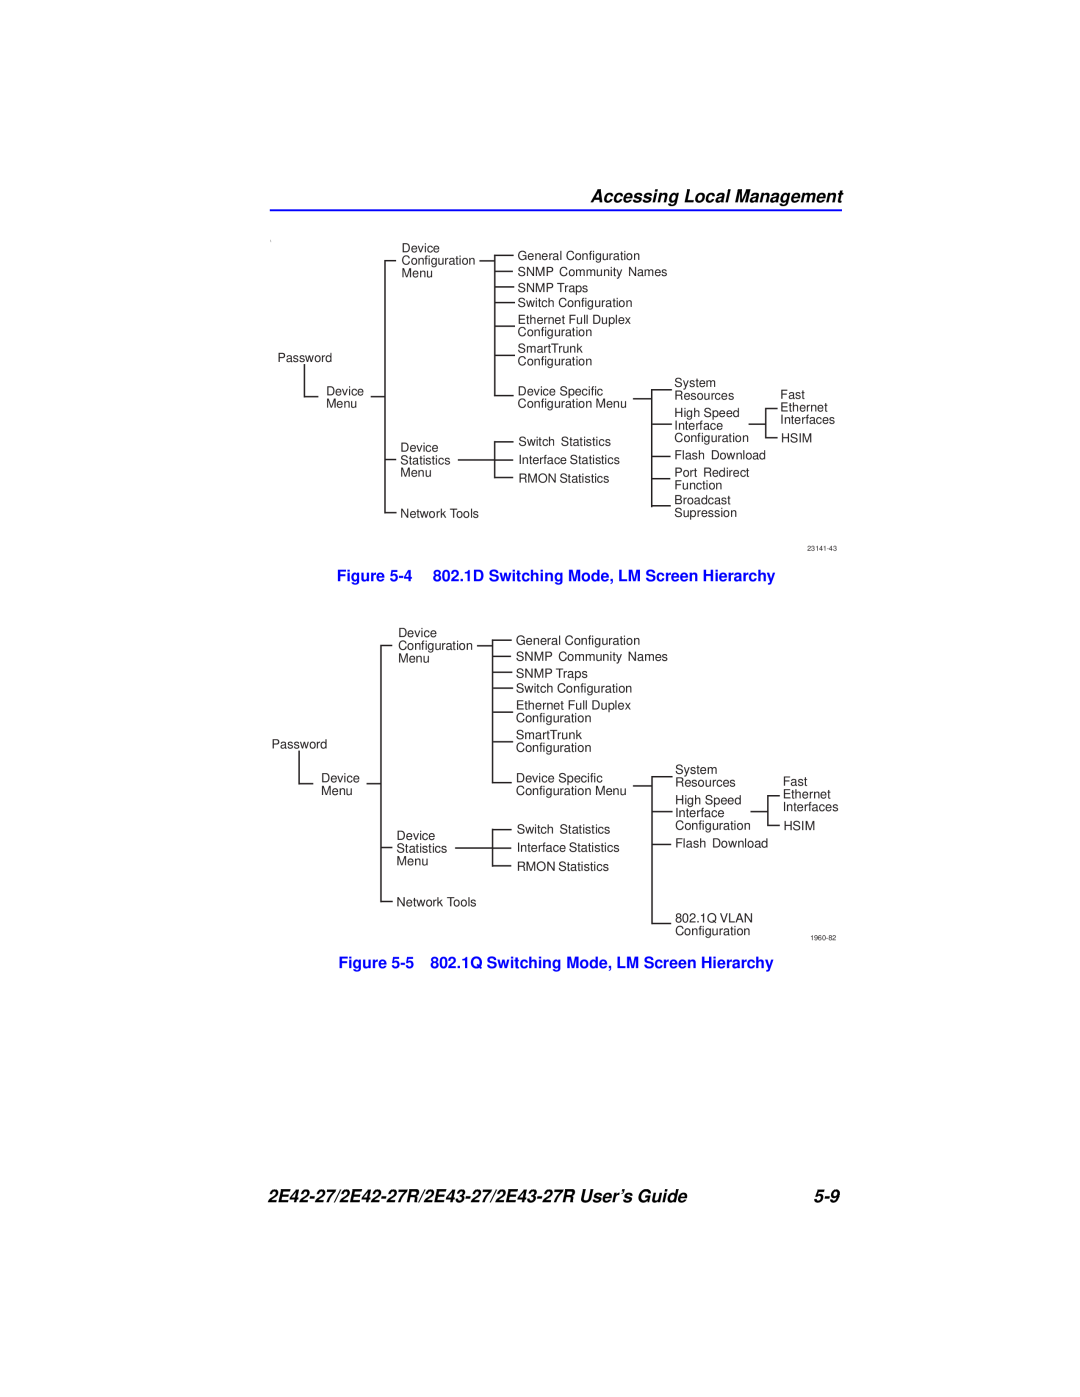 Cabletron Systems manual Accessing Local Management, 2E42-27/2E42-27R/2E43-27/2E43-27R User’s Guide 